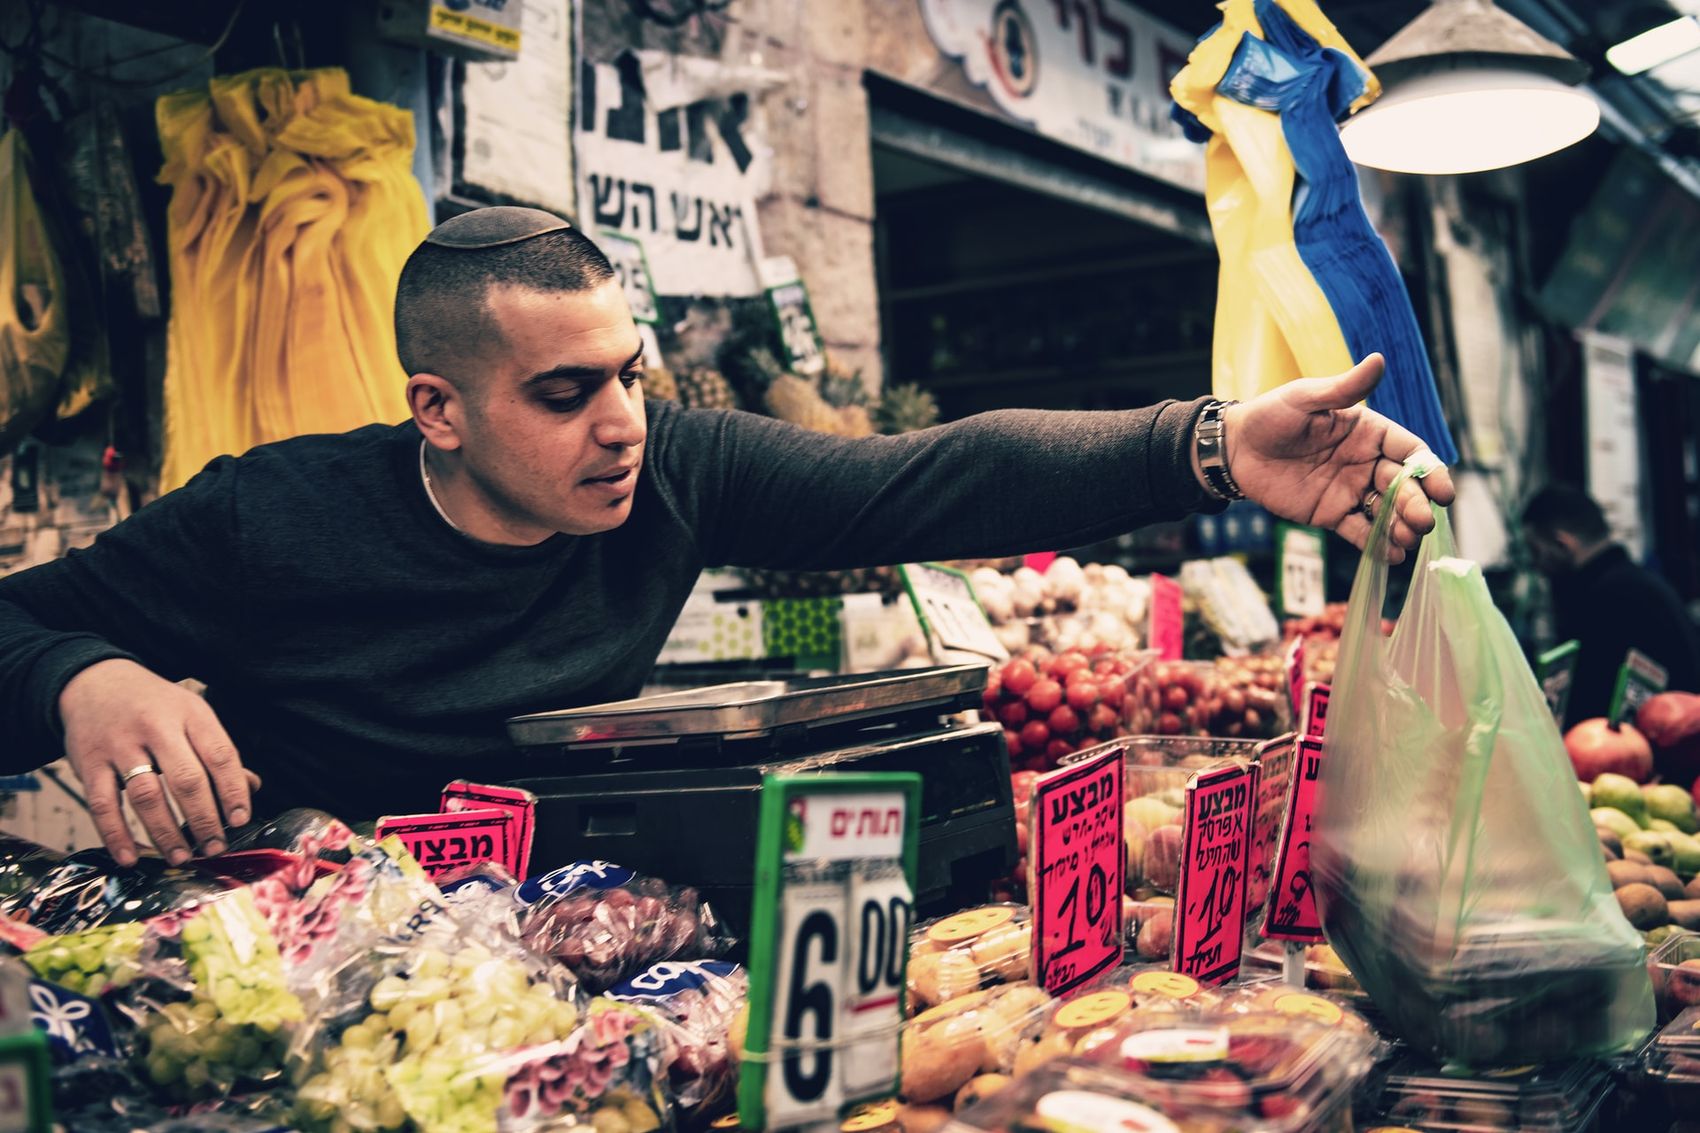 Mahane Yehuda market in Israel